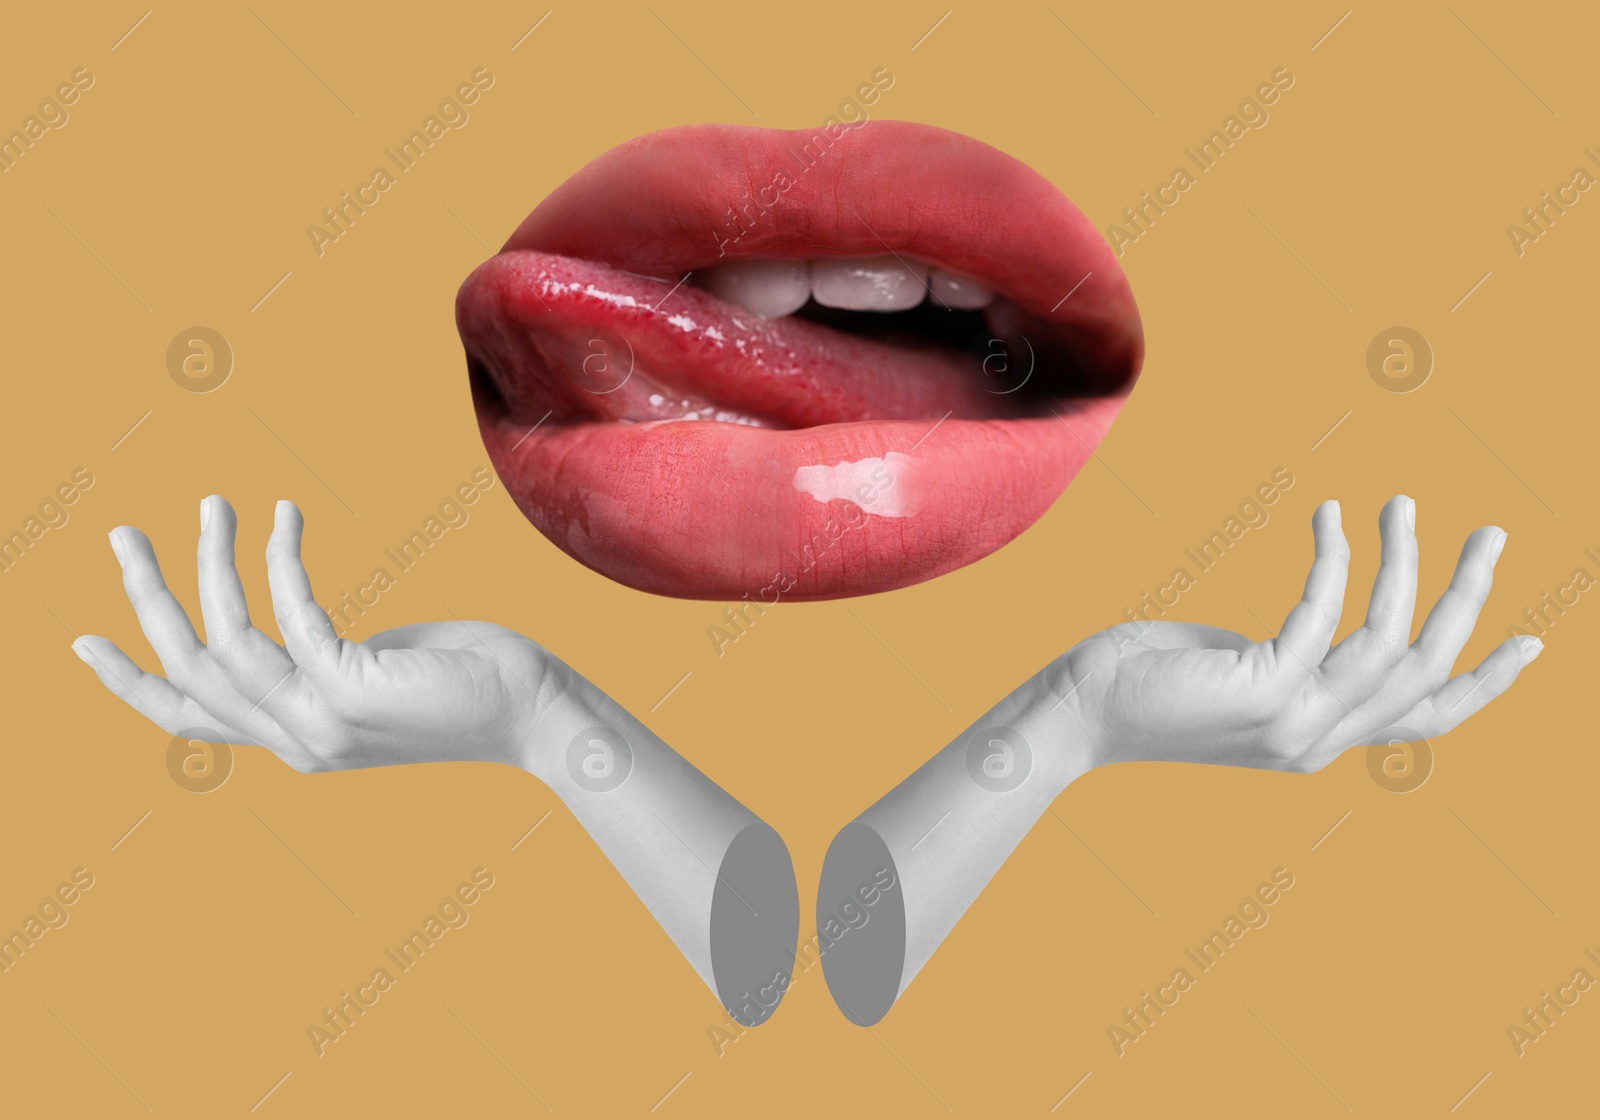 Image of Female lips and hands on pale orange background, stylish art collage